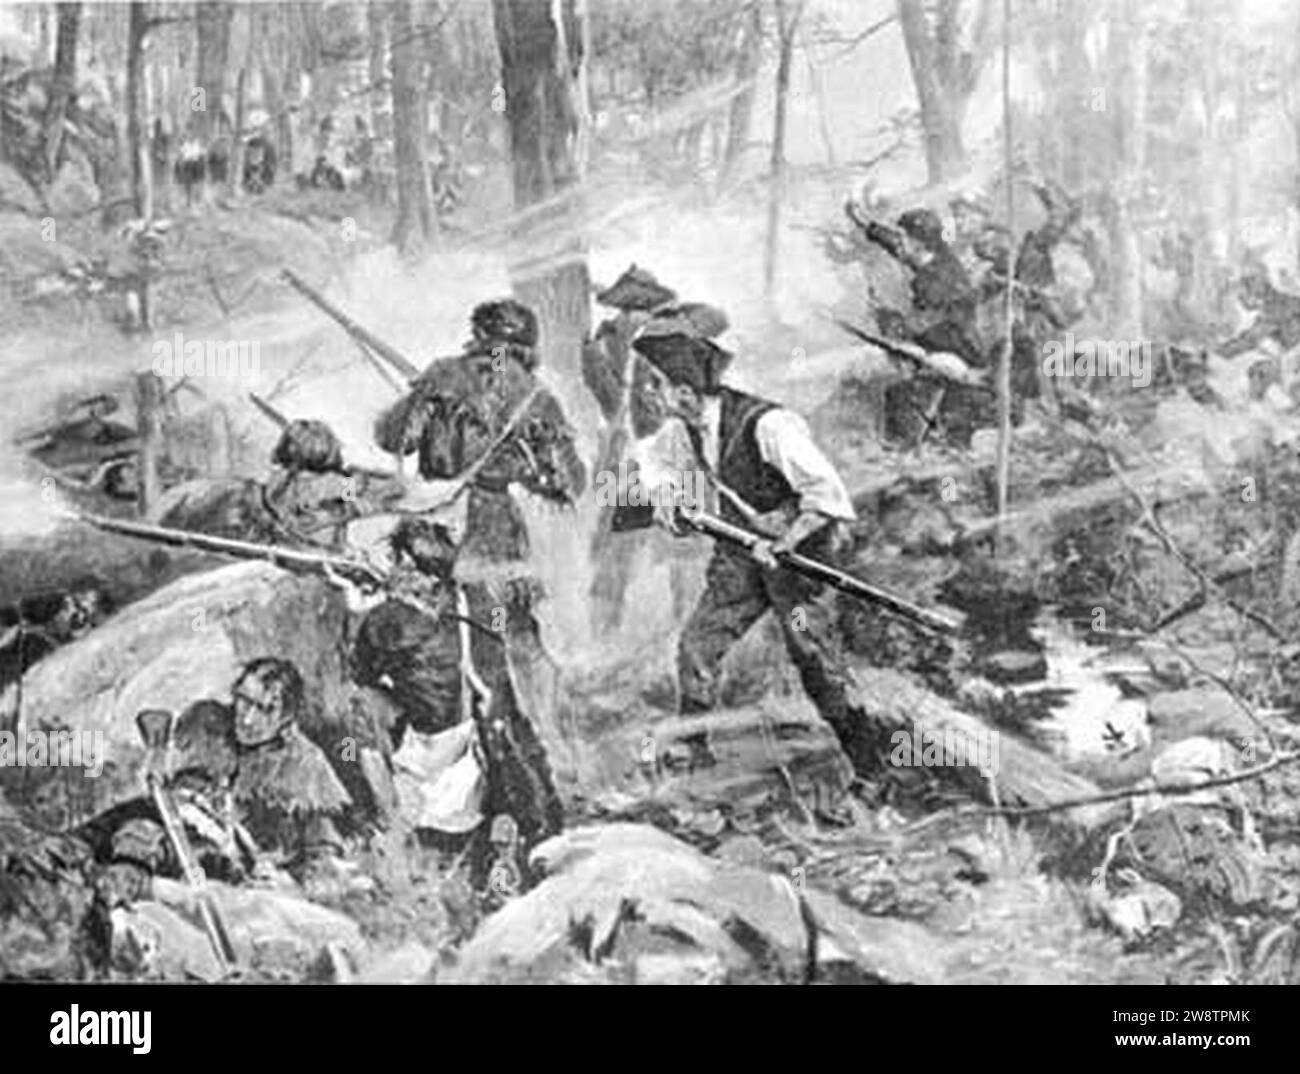 Yohn Battle of Kings Mountain. Stock Photo